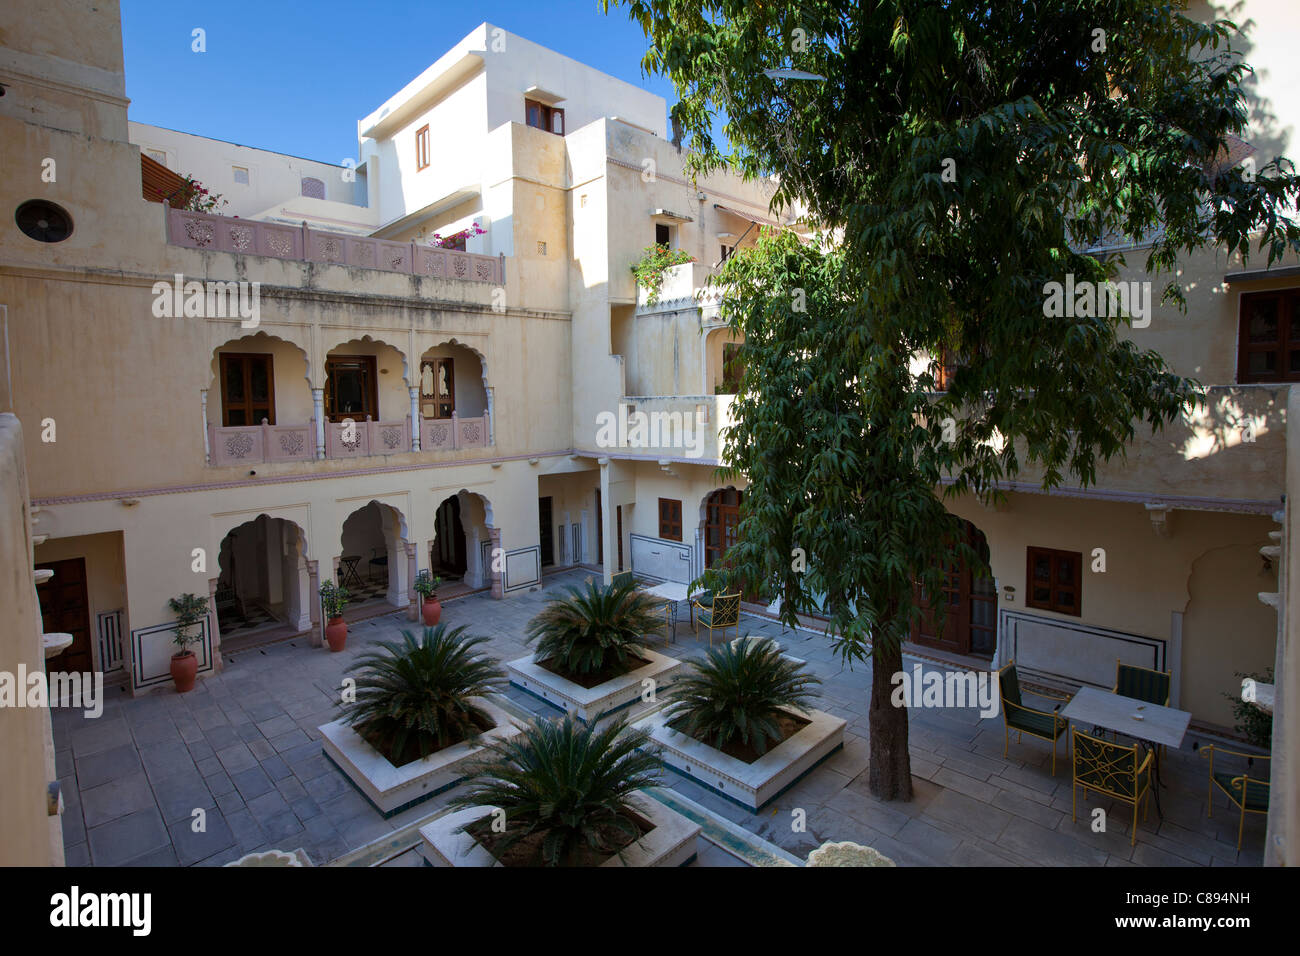 Samode Haveli luxury hotel, former merchant's house, inner courtyard in Jaipur, Rajasthan, Northern India Stock Photo